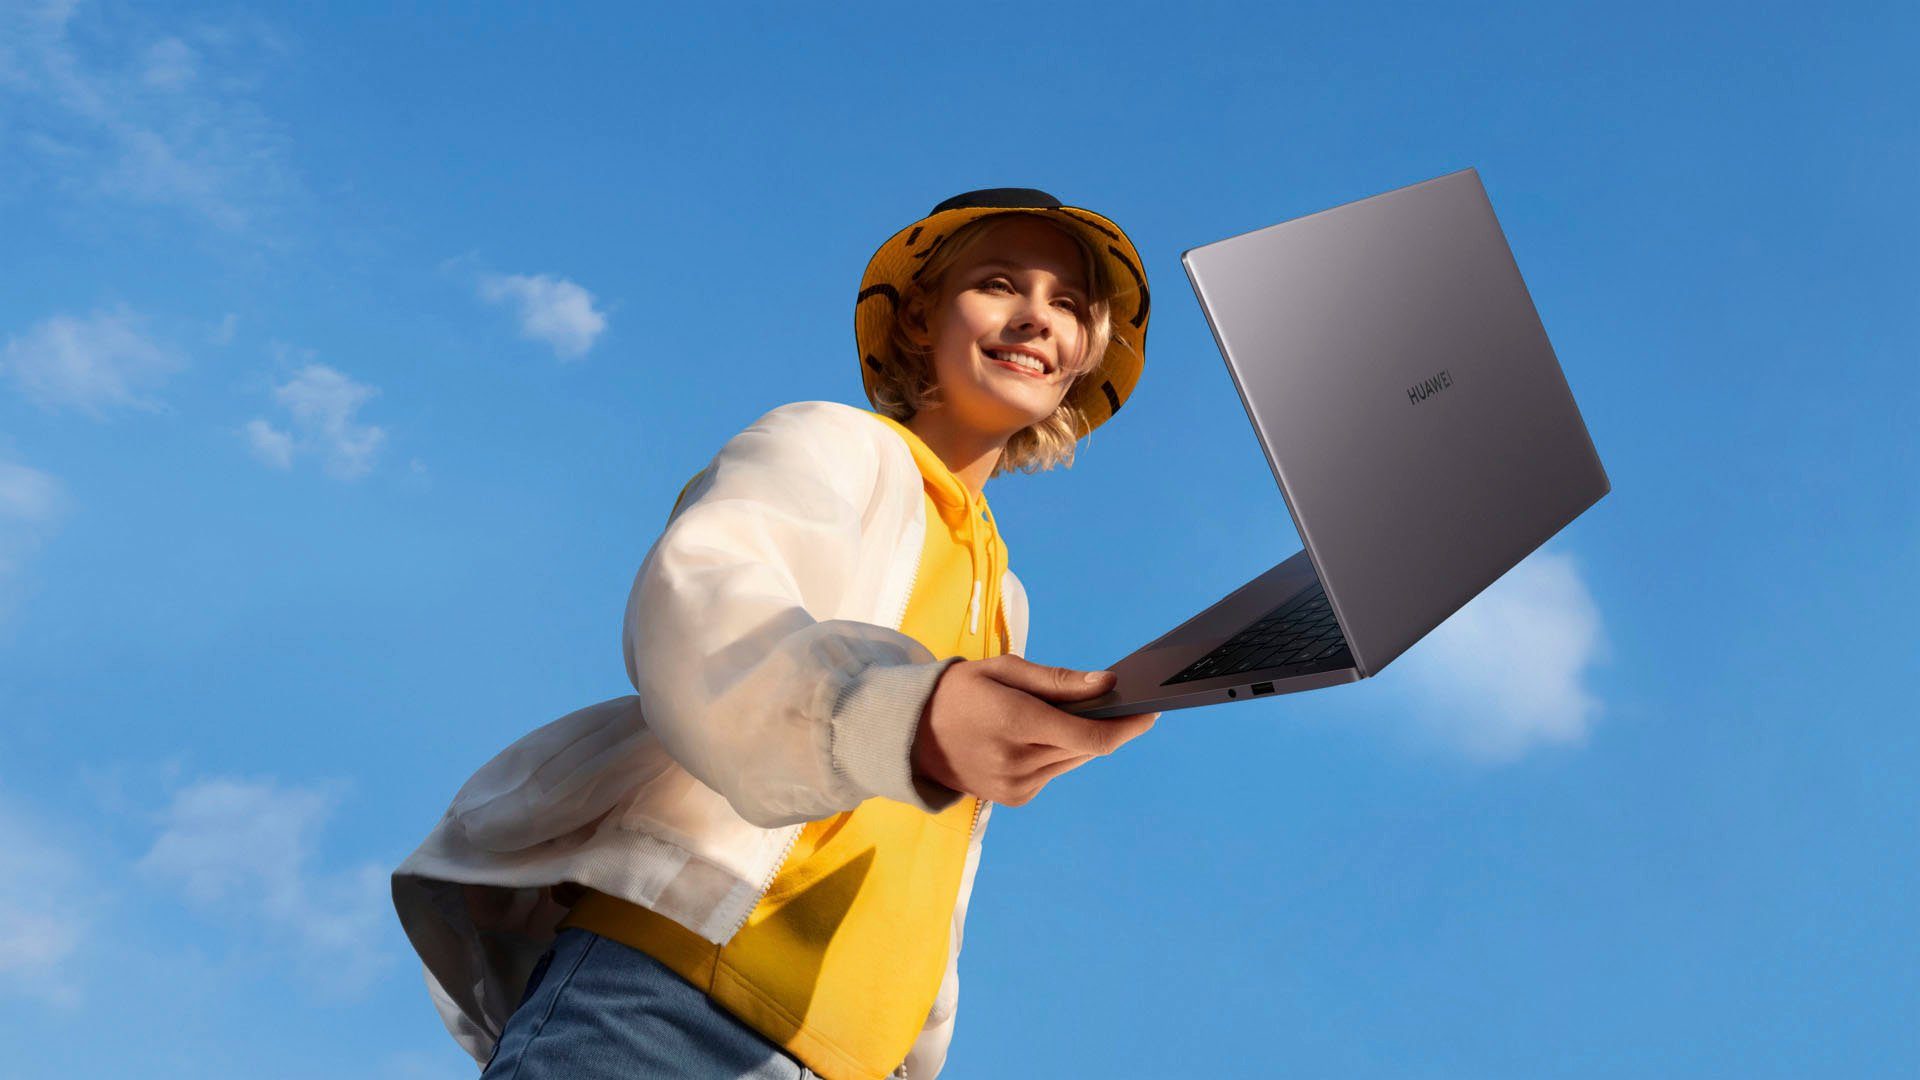 Notebook 1155G7, MateBook Graphics, i5 GB Xᵉ D14 Iris® Huawei 512 cm/14 SSD) 2022 (35,56 Core Intel Zoll,